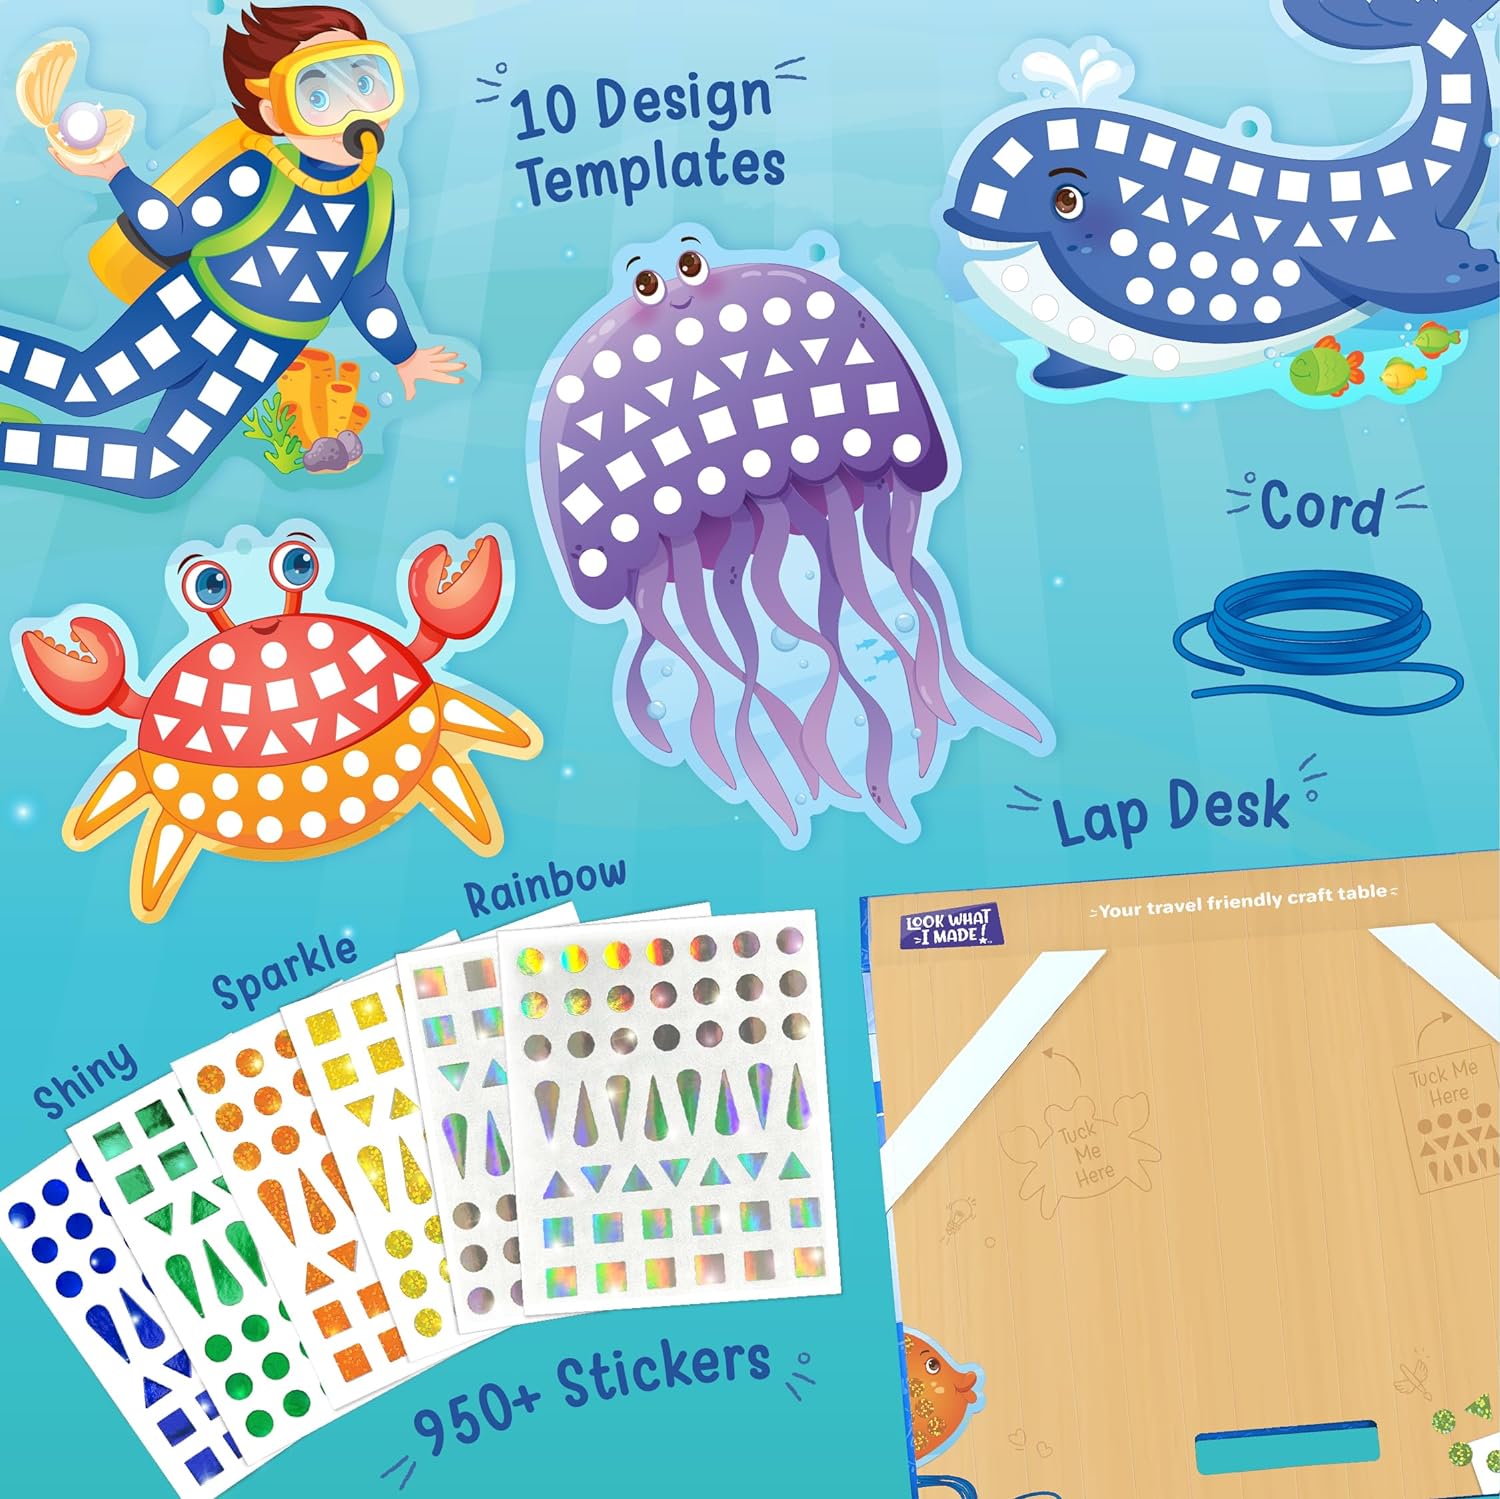 Imagimake Mirror Mosaic Ocean | Mess Free DIY Mosaic Craft kit ,950+ Foil Sticker | Birthday Gift for Girls Ages 4 5 6 7 Year Old